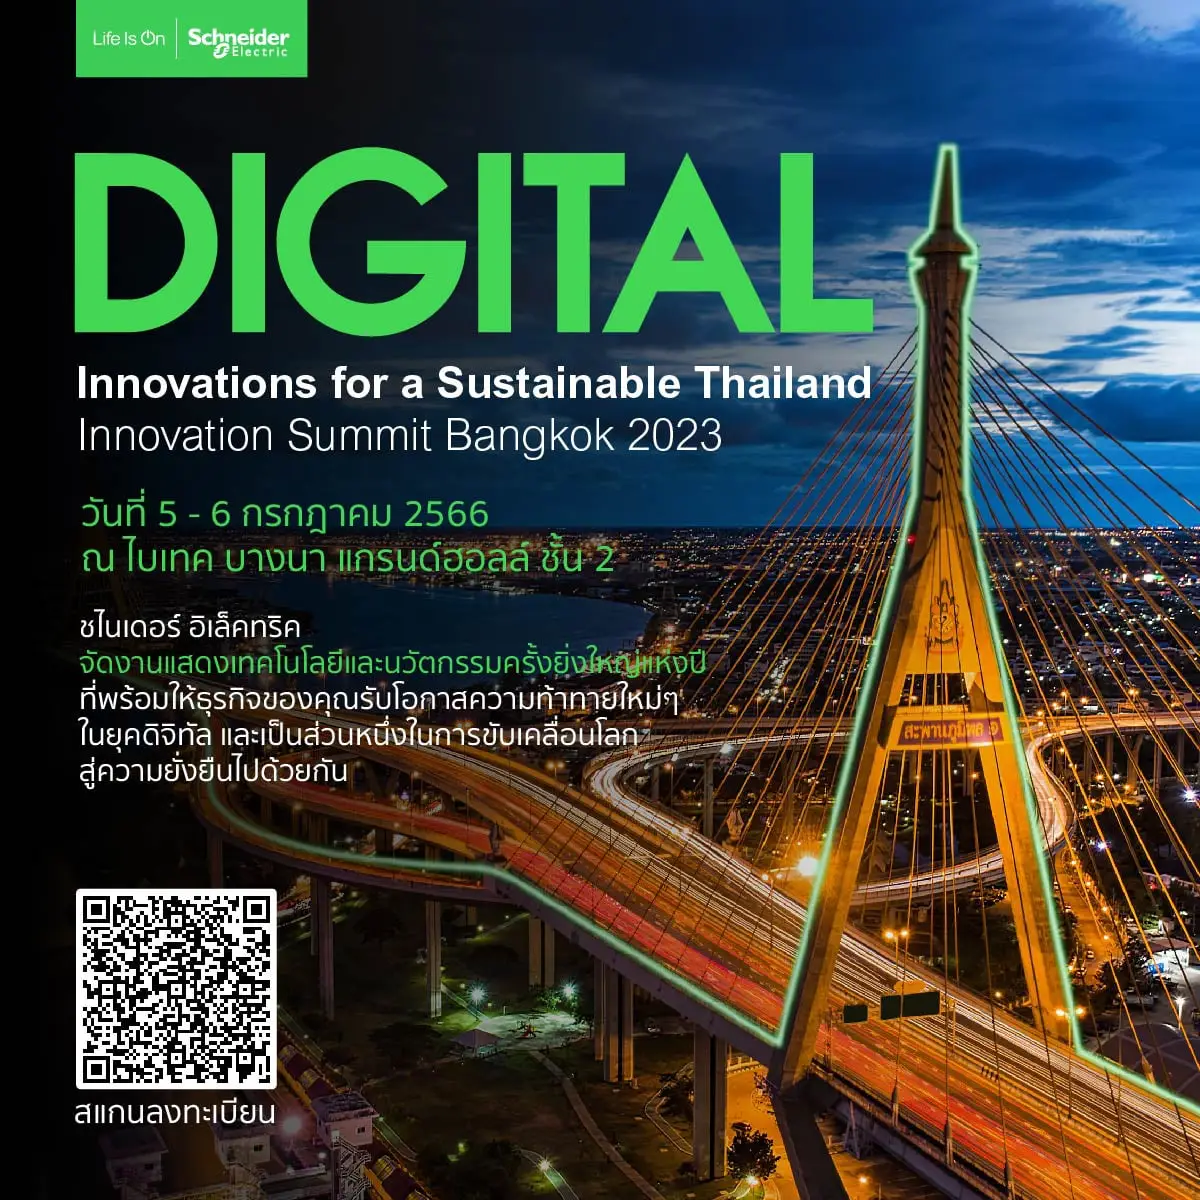 Schneider Electric Innovation Summit Bangkok 2023